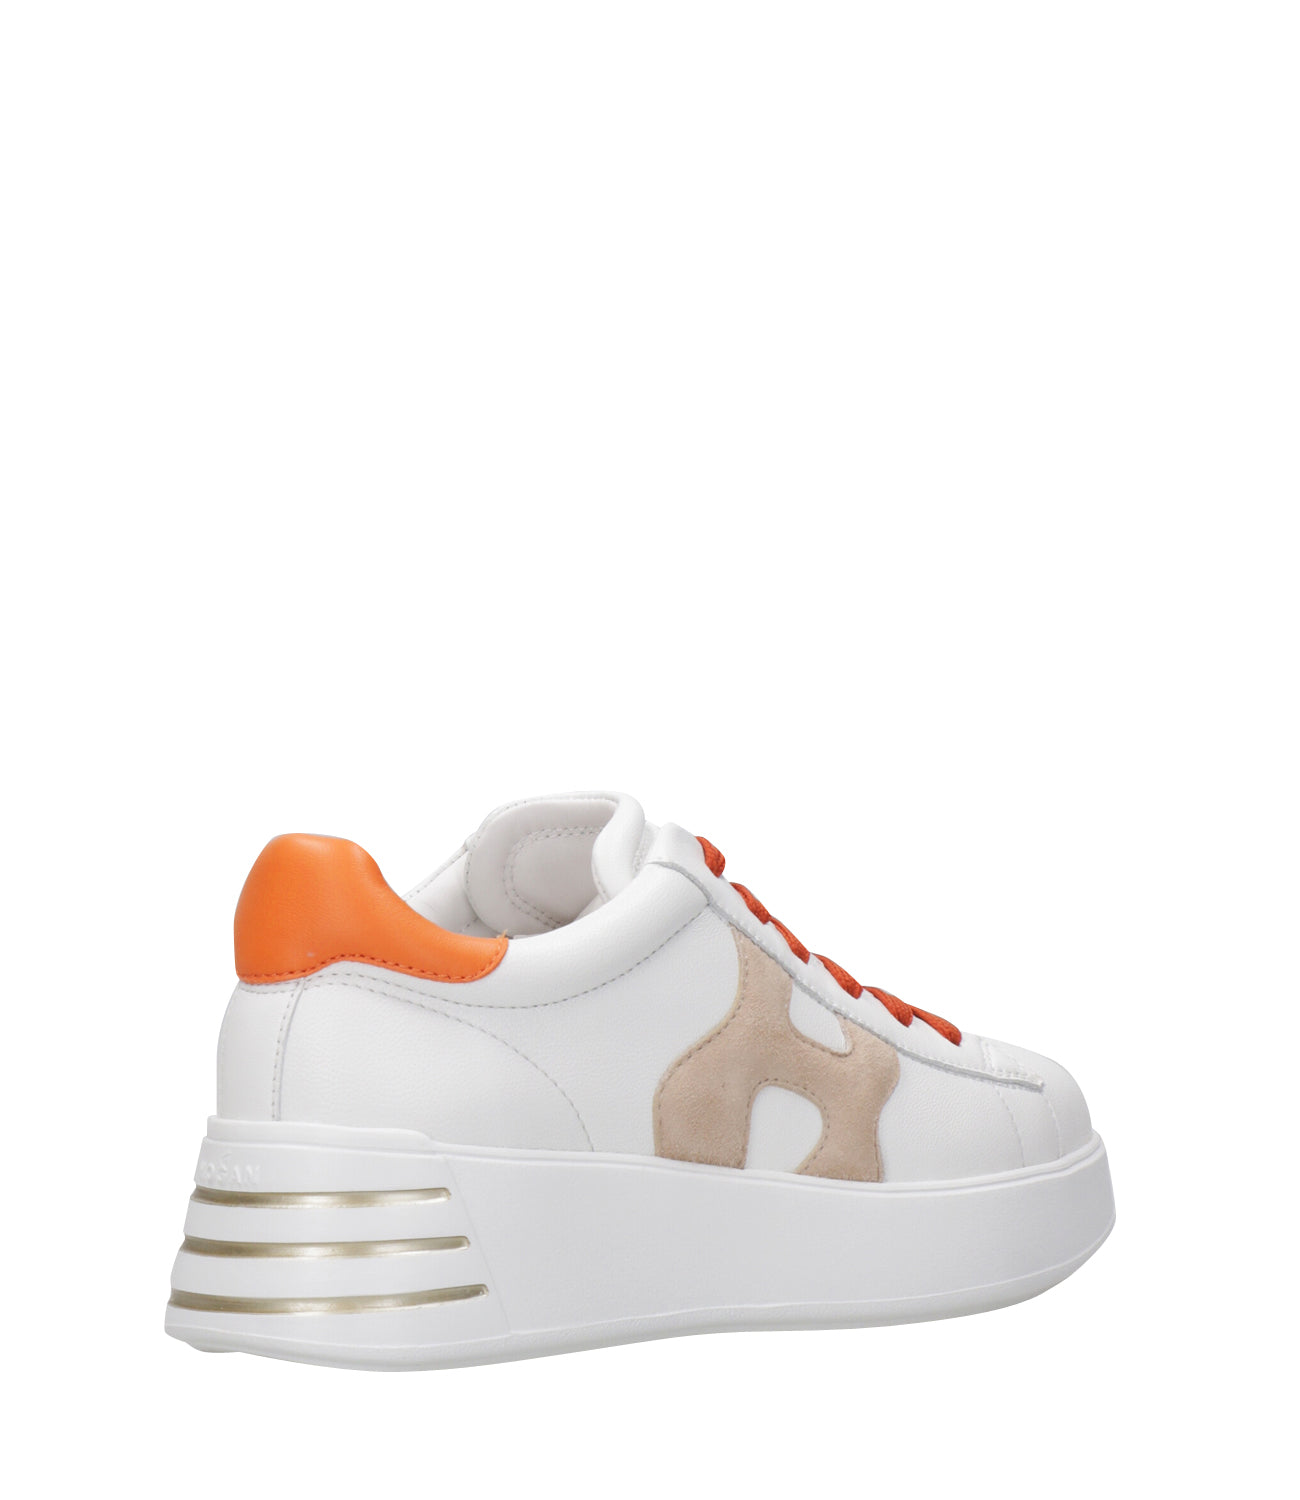 Hogan | Rebel Sneakers White and Orange